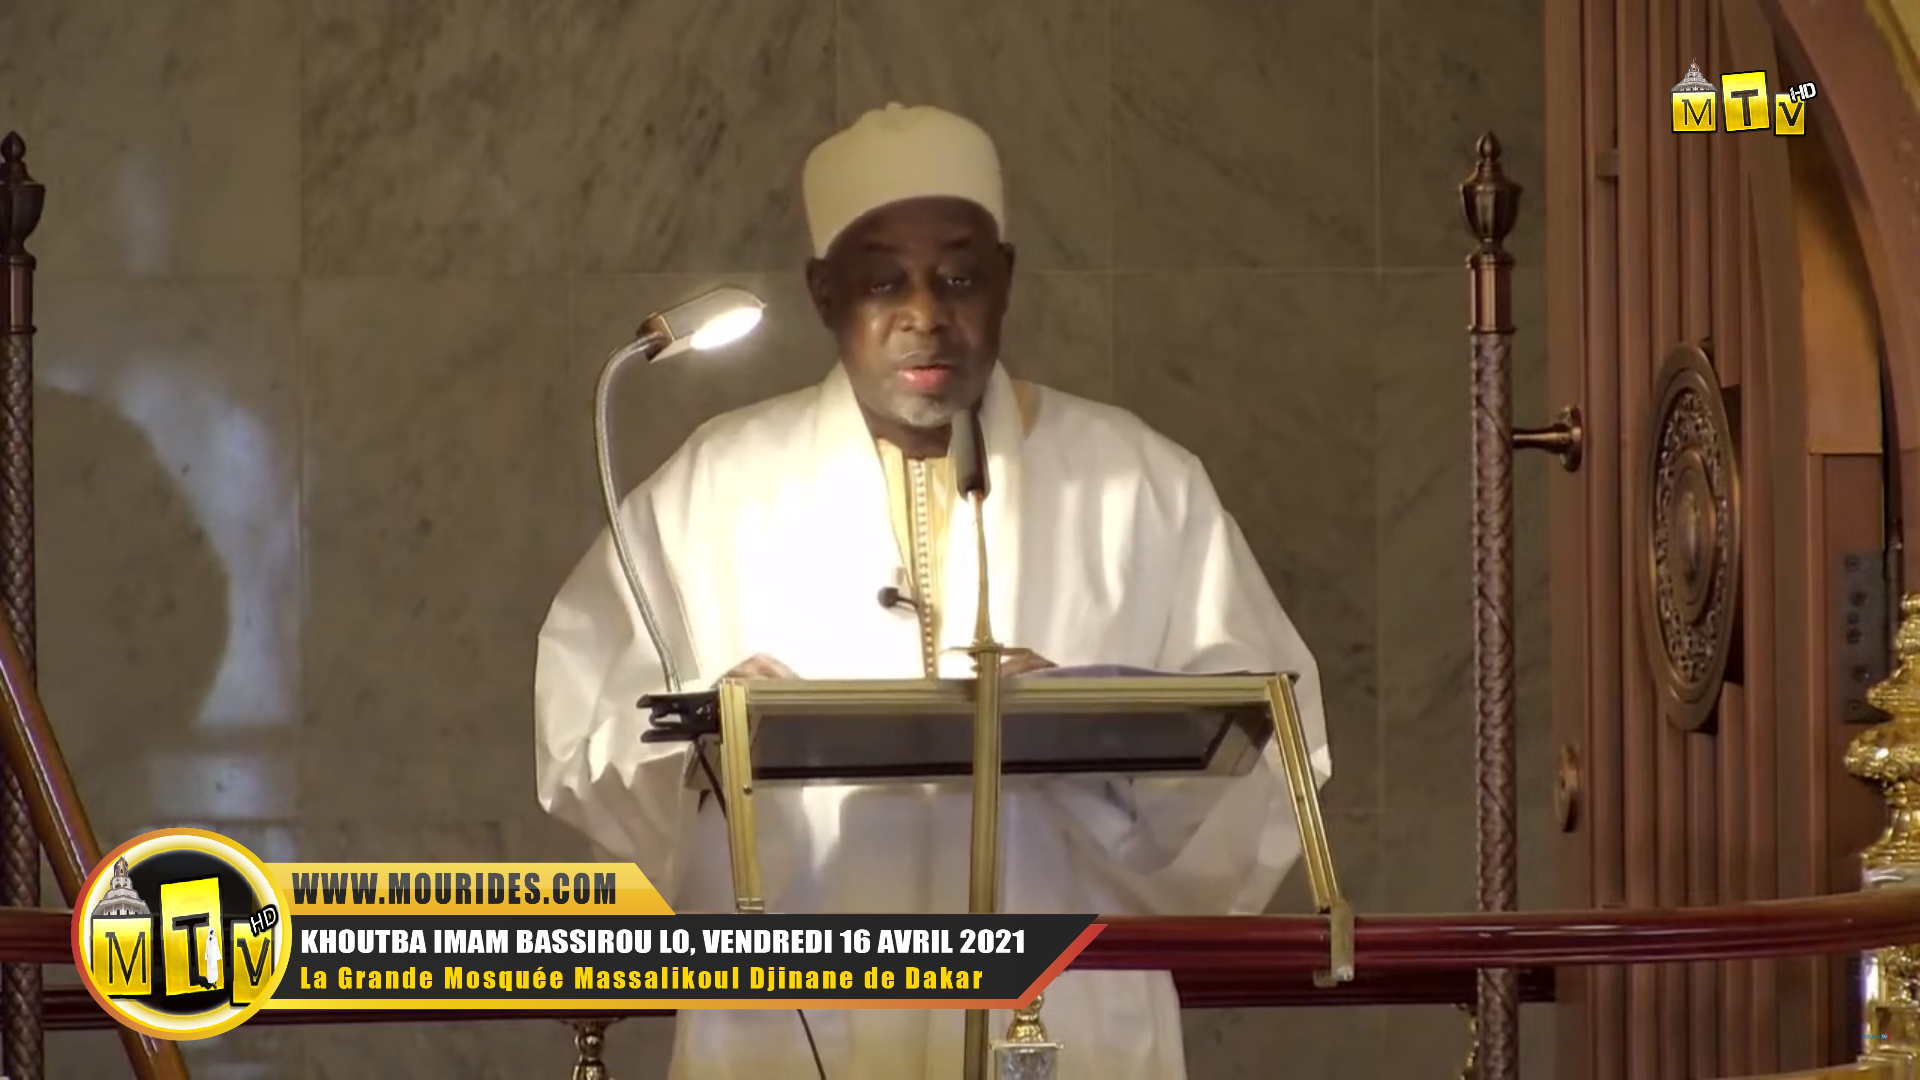 Khoutba Imam Bassirou Lo du vendredi 16 avril 2021 a la Mosquee Massalikoul Djinane de Dakar